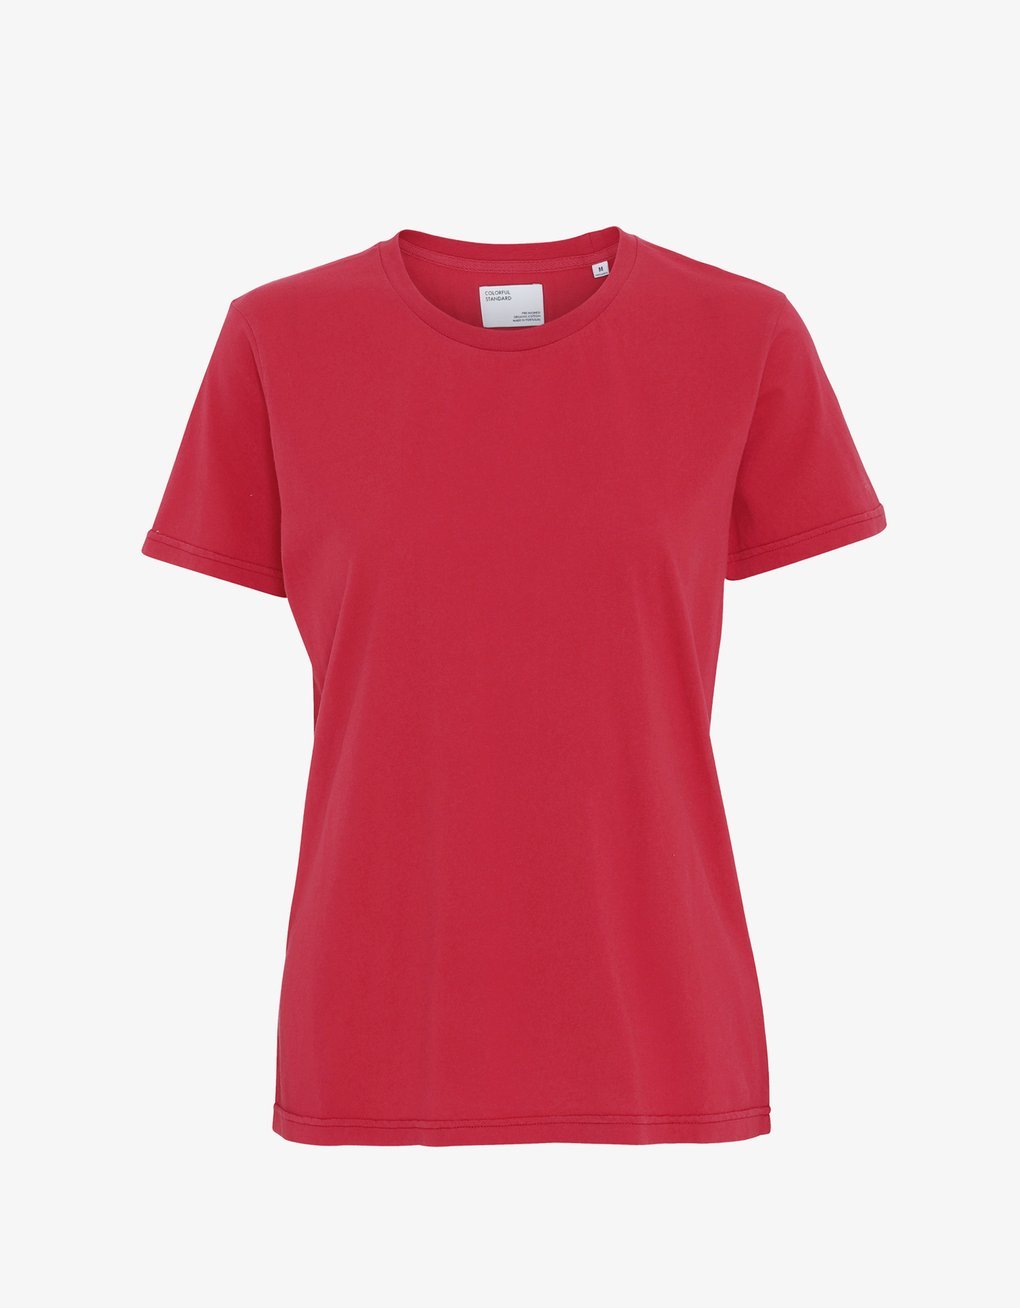 Camiseta Ligera de Mujer Orgánica Roja - ECRU